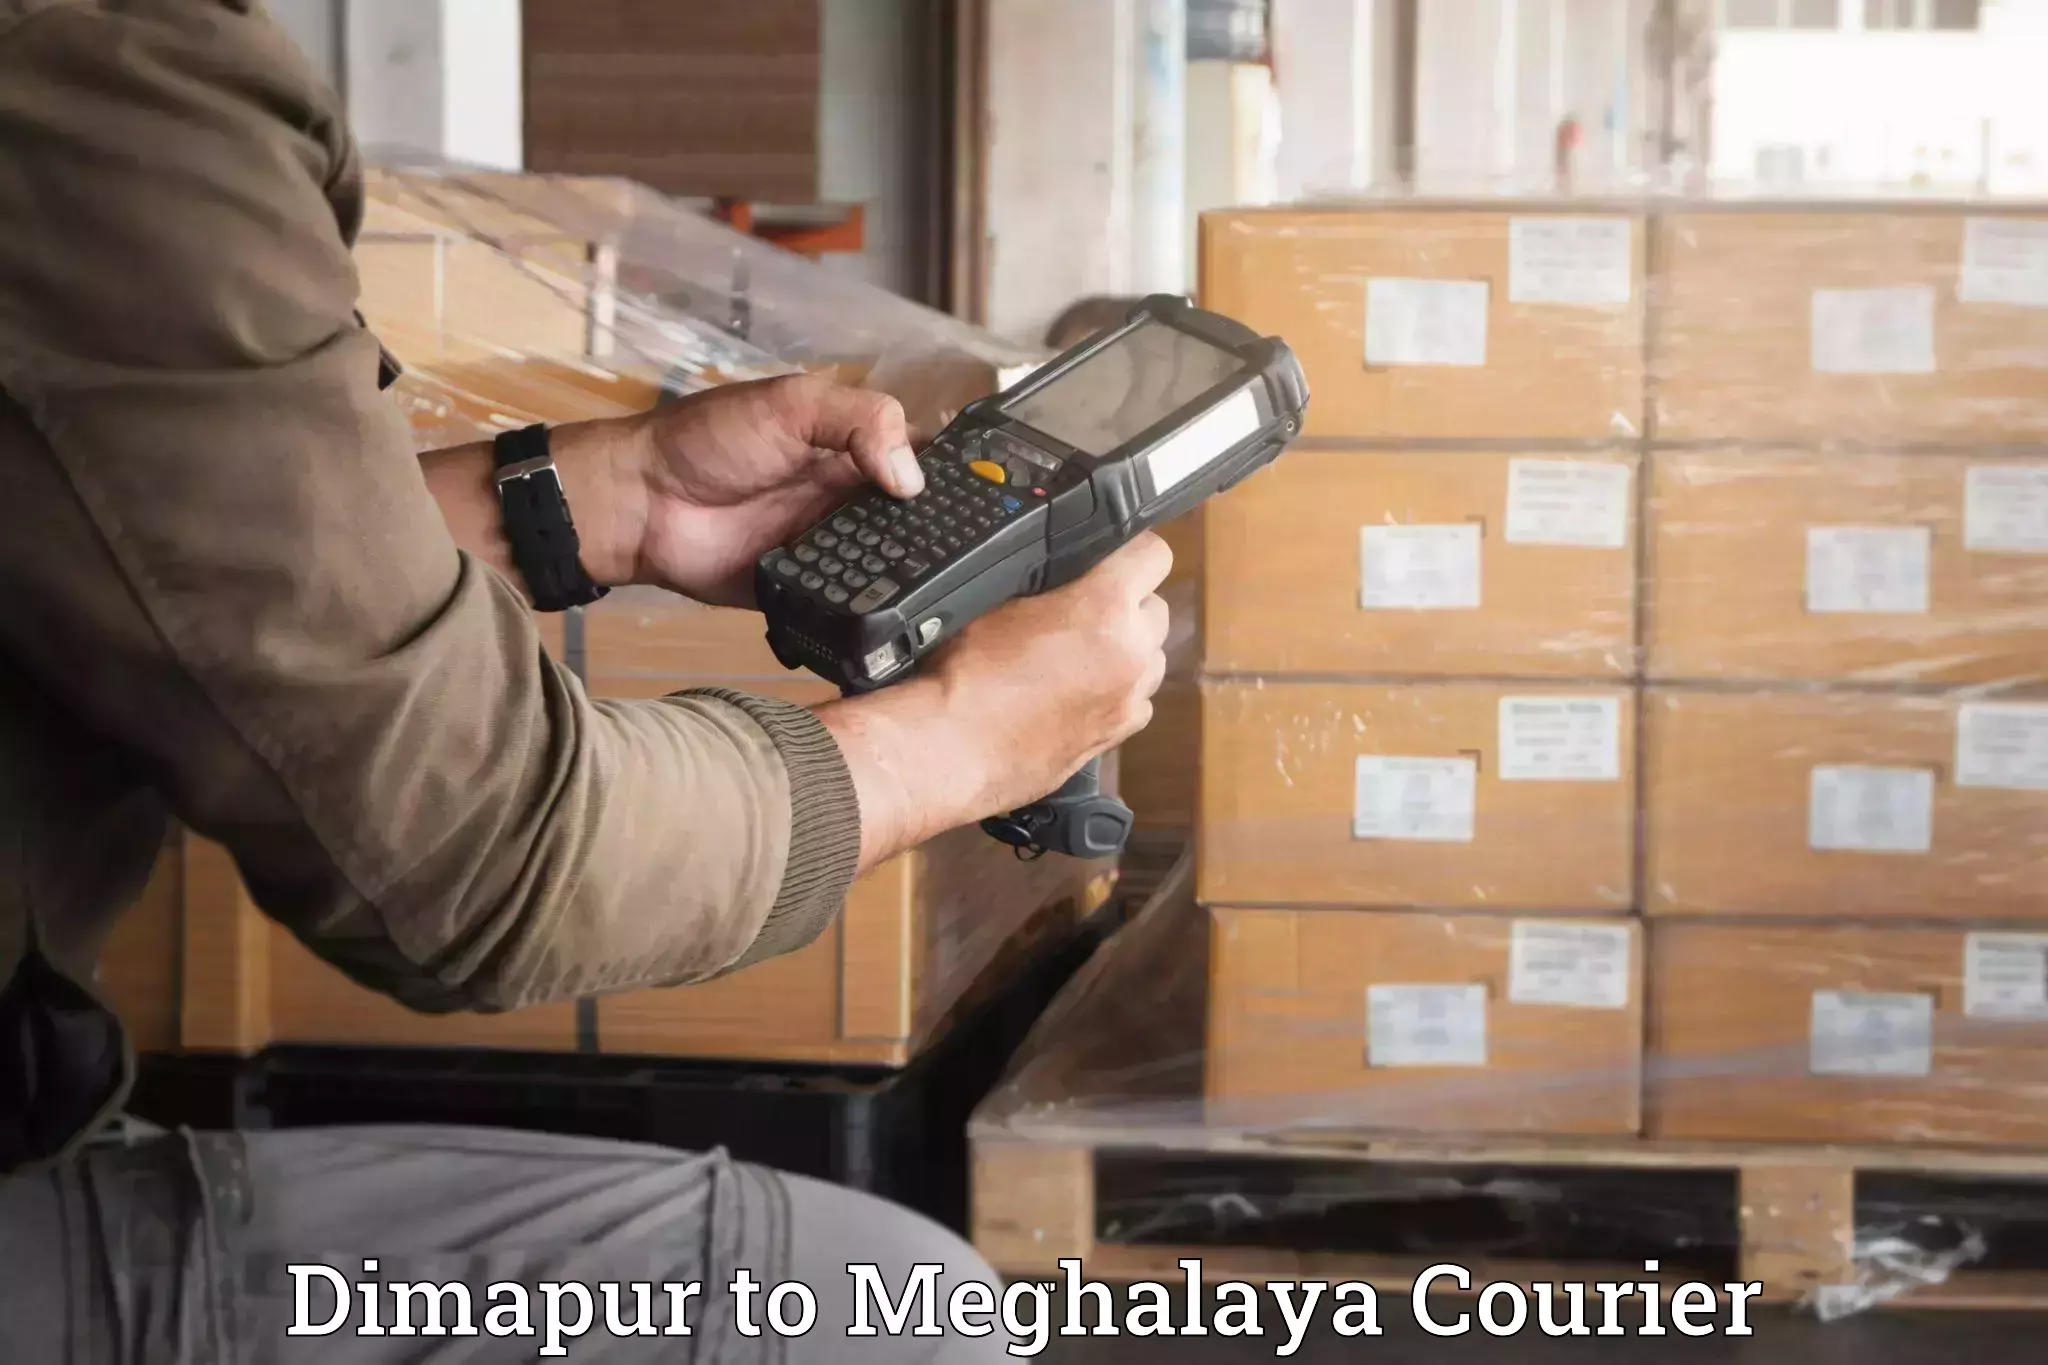 Professional packing services Dimapur to Cherrapunji